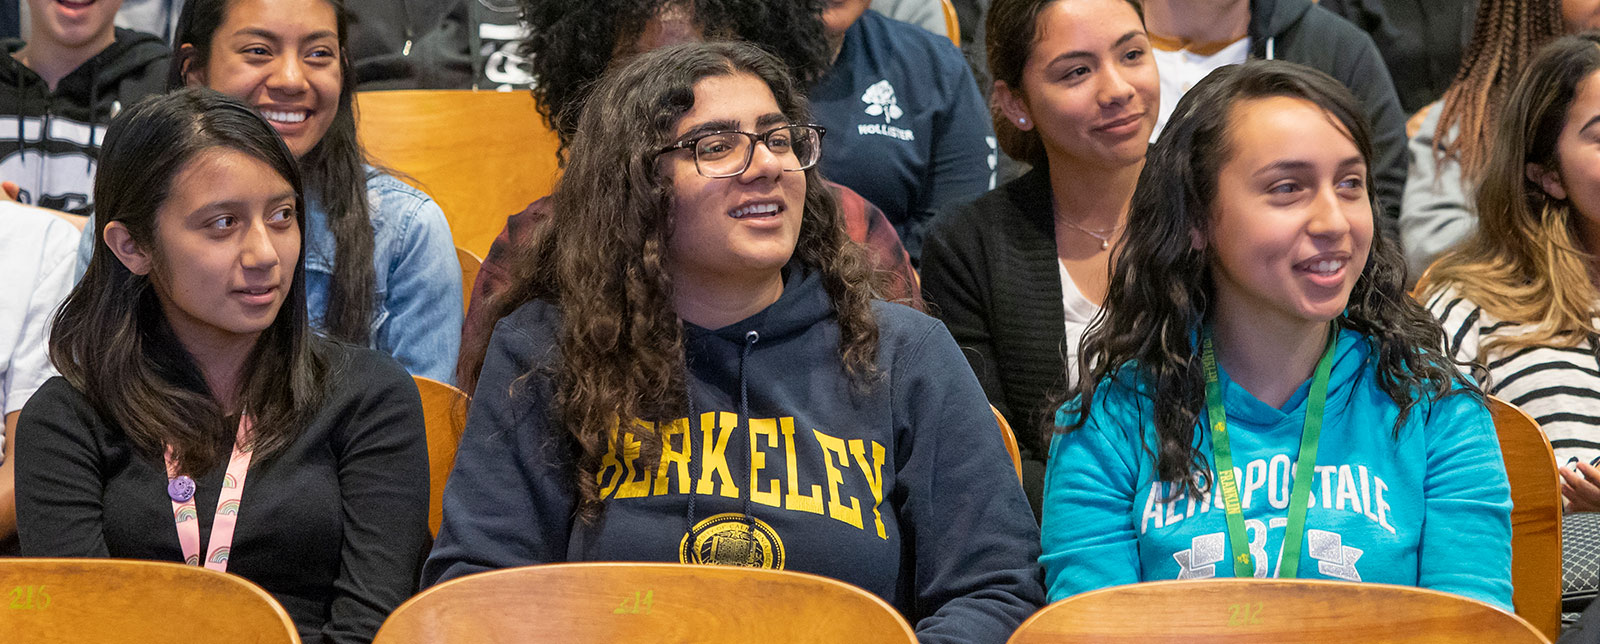 Students sitting at Janet Napolitano's Stockton visit